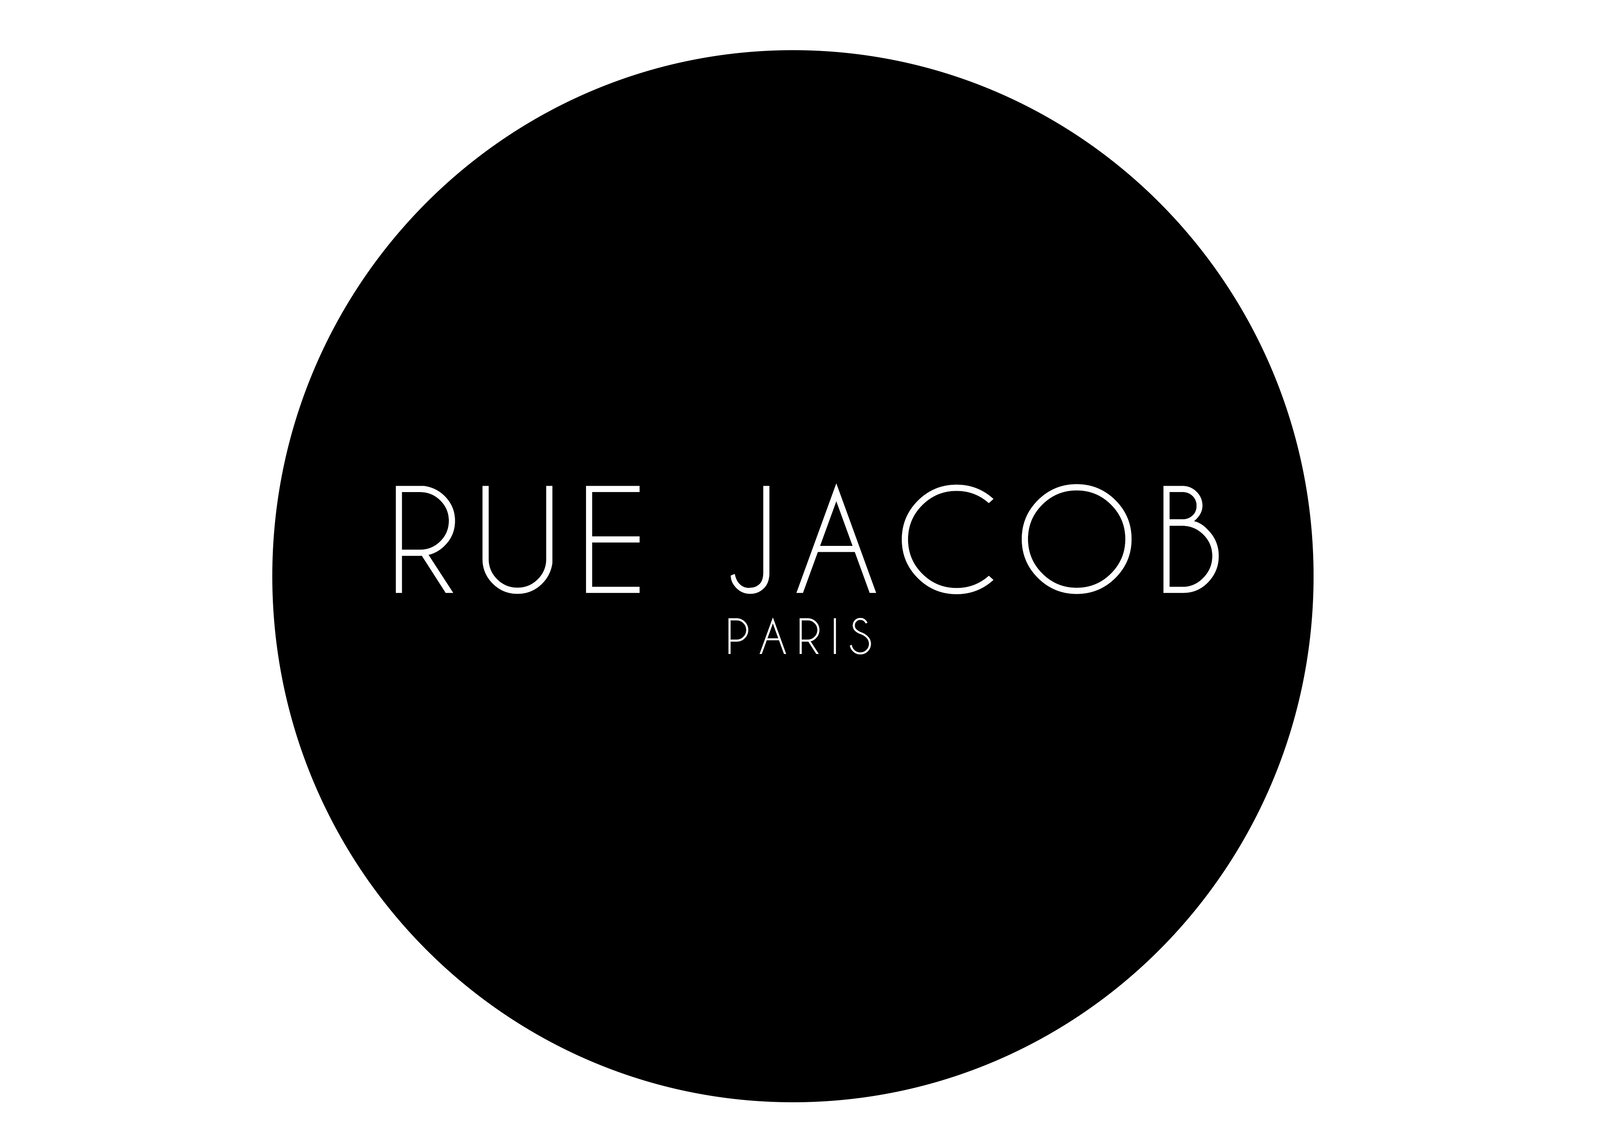 RUE JACOB PARIS